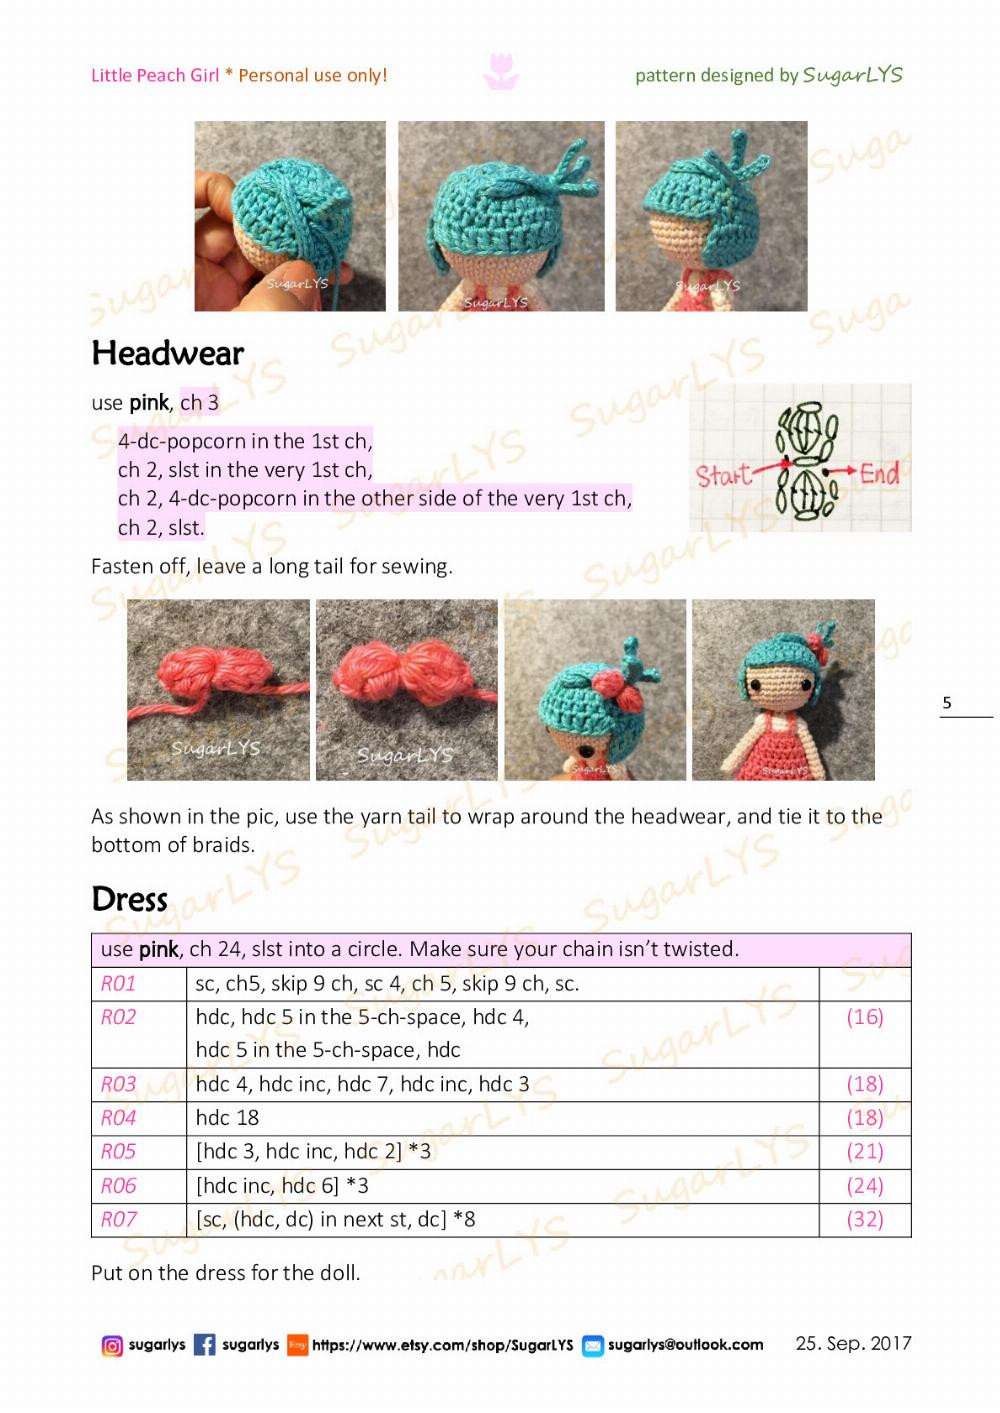 Little Peach Girl crochet pattern